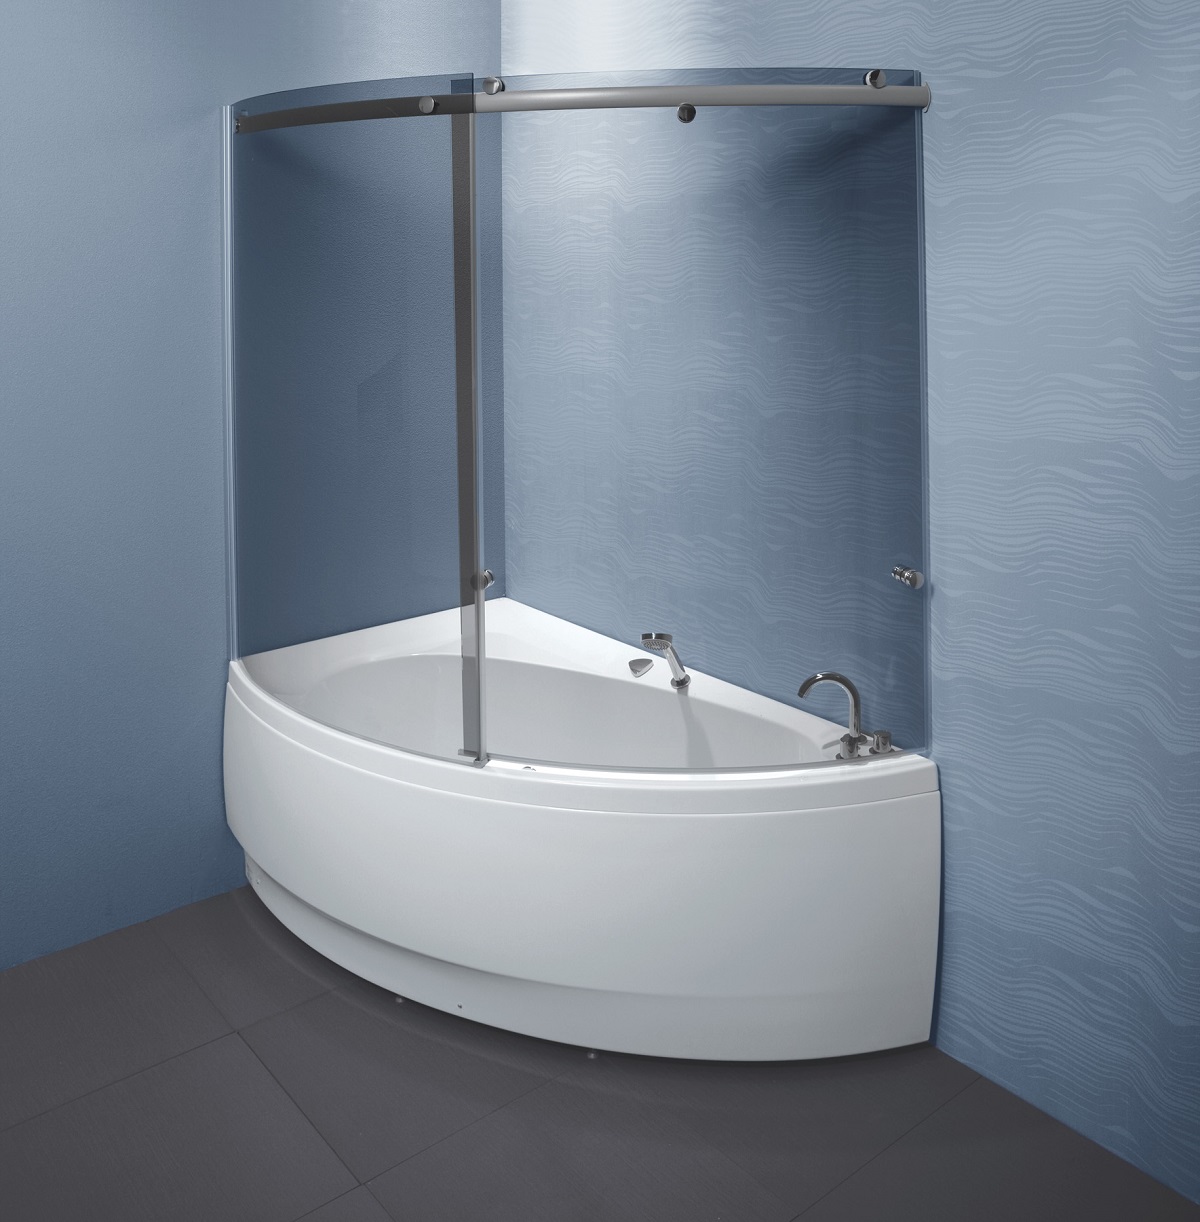 Bath Tub Shower Combo, Bathtub Shower Combo For Small Bathroom